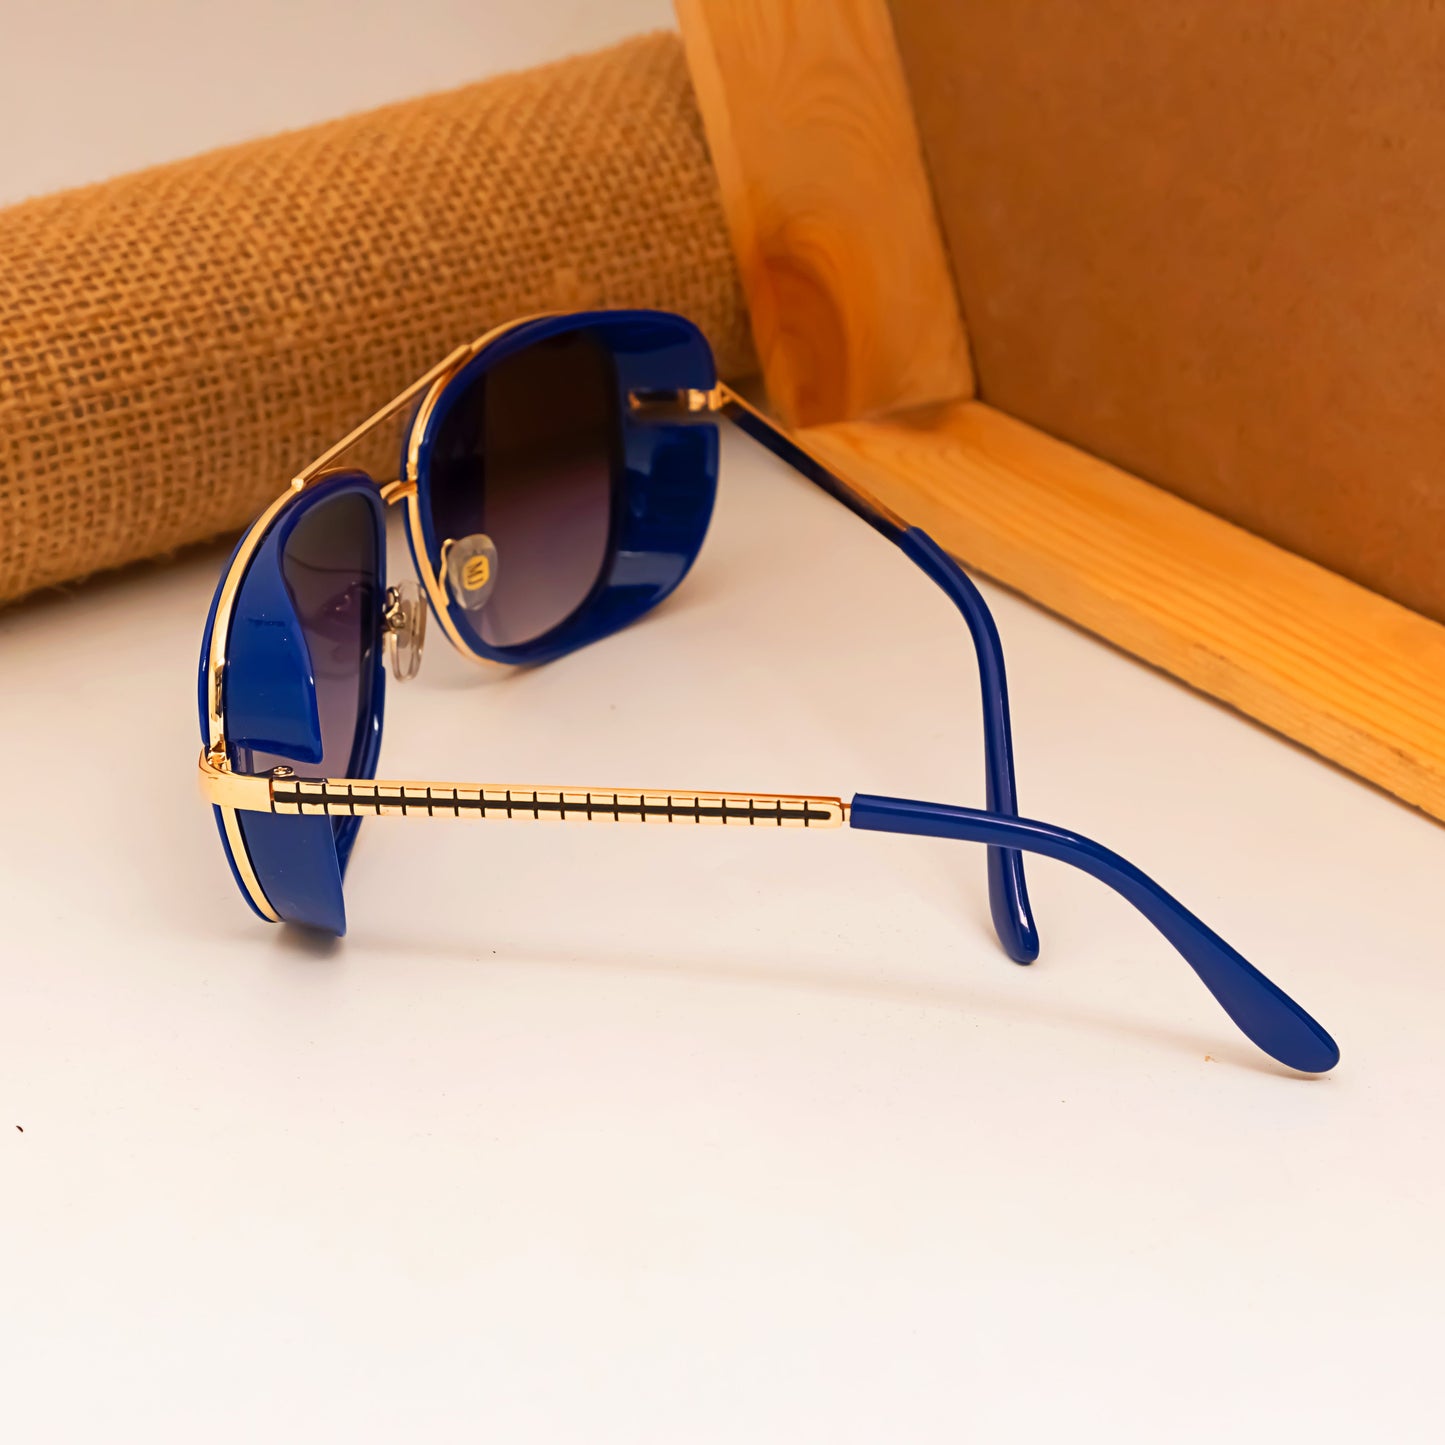 Cloriss Gold And Grey Gradient Retro Square Sunglasses